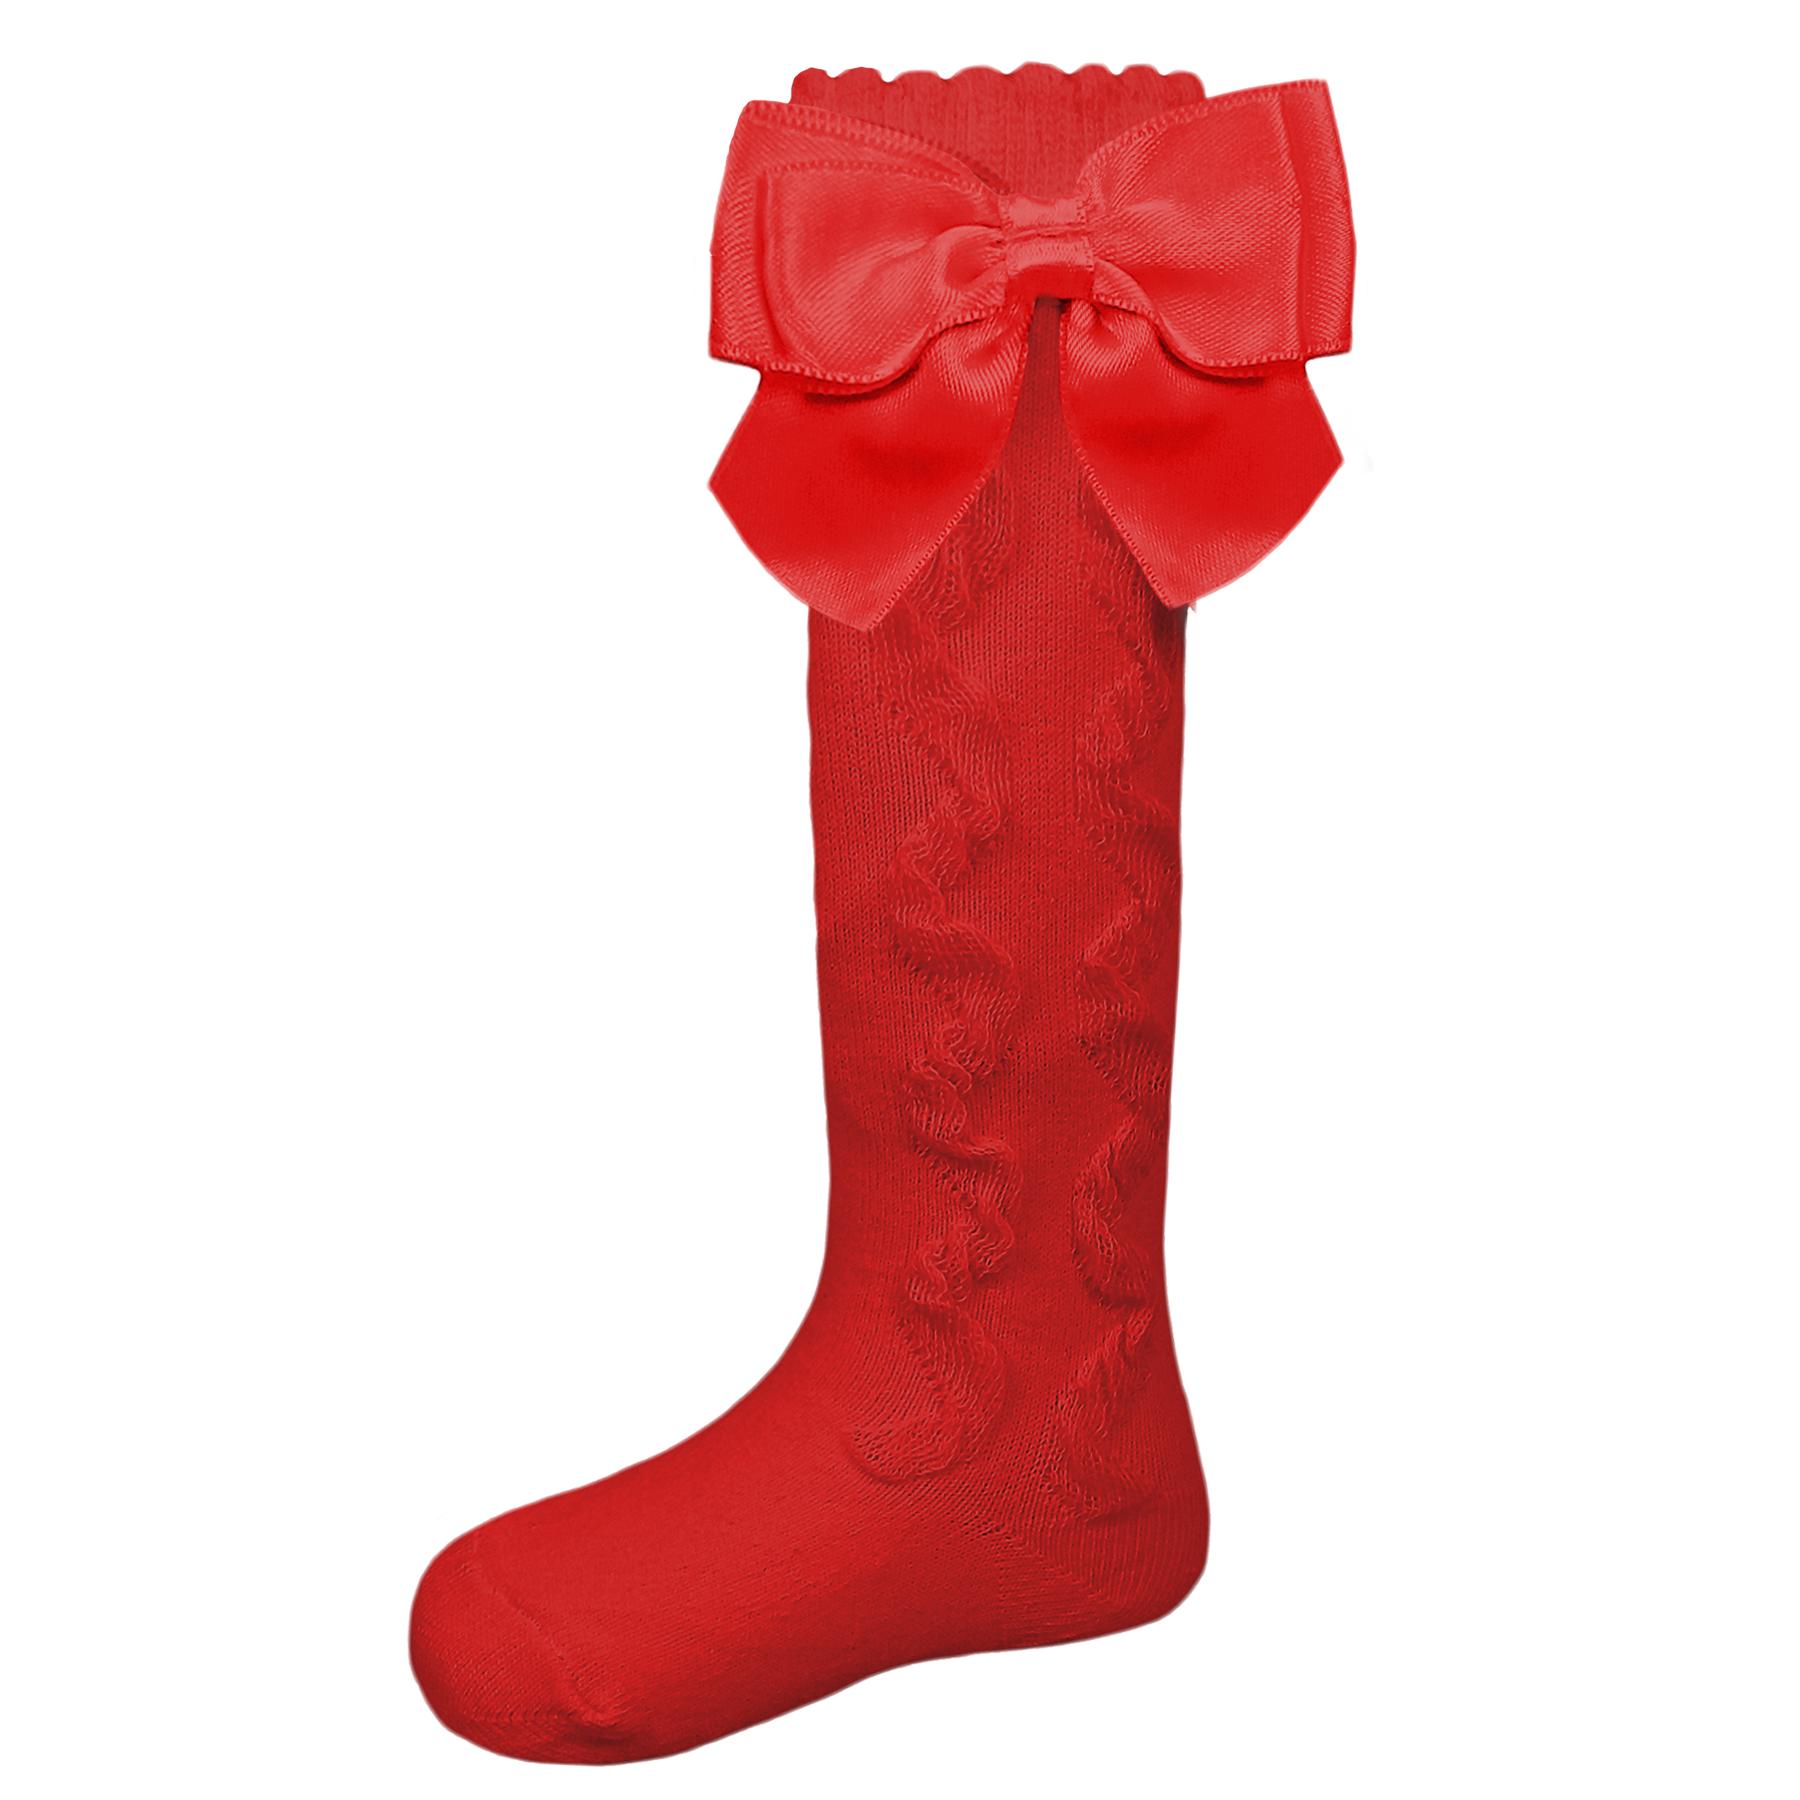 Pex Kids Grazia Knee High Side Bow Ruffle Socks in Red